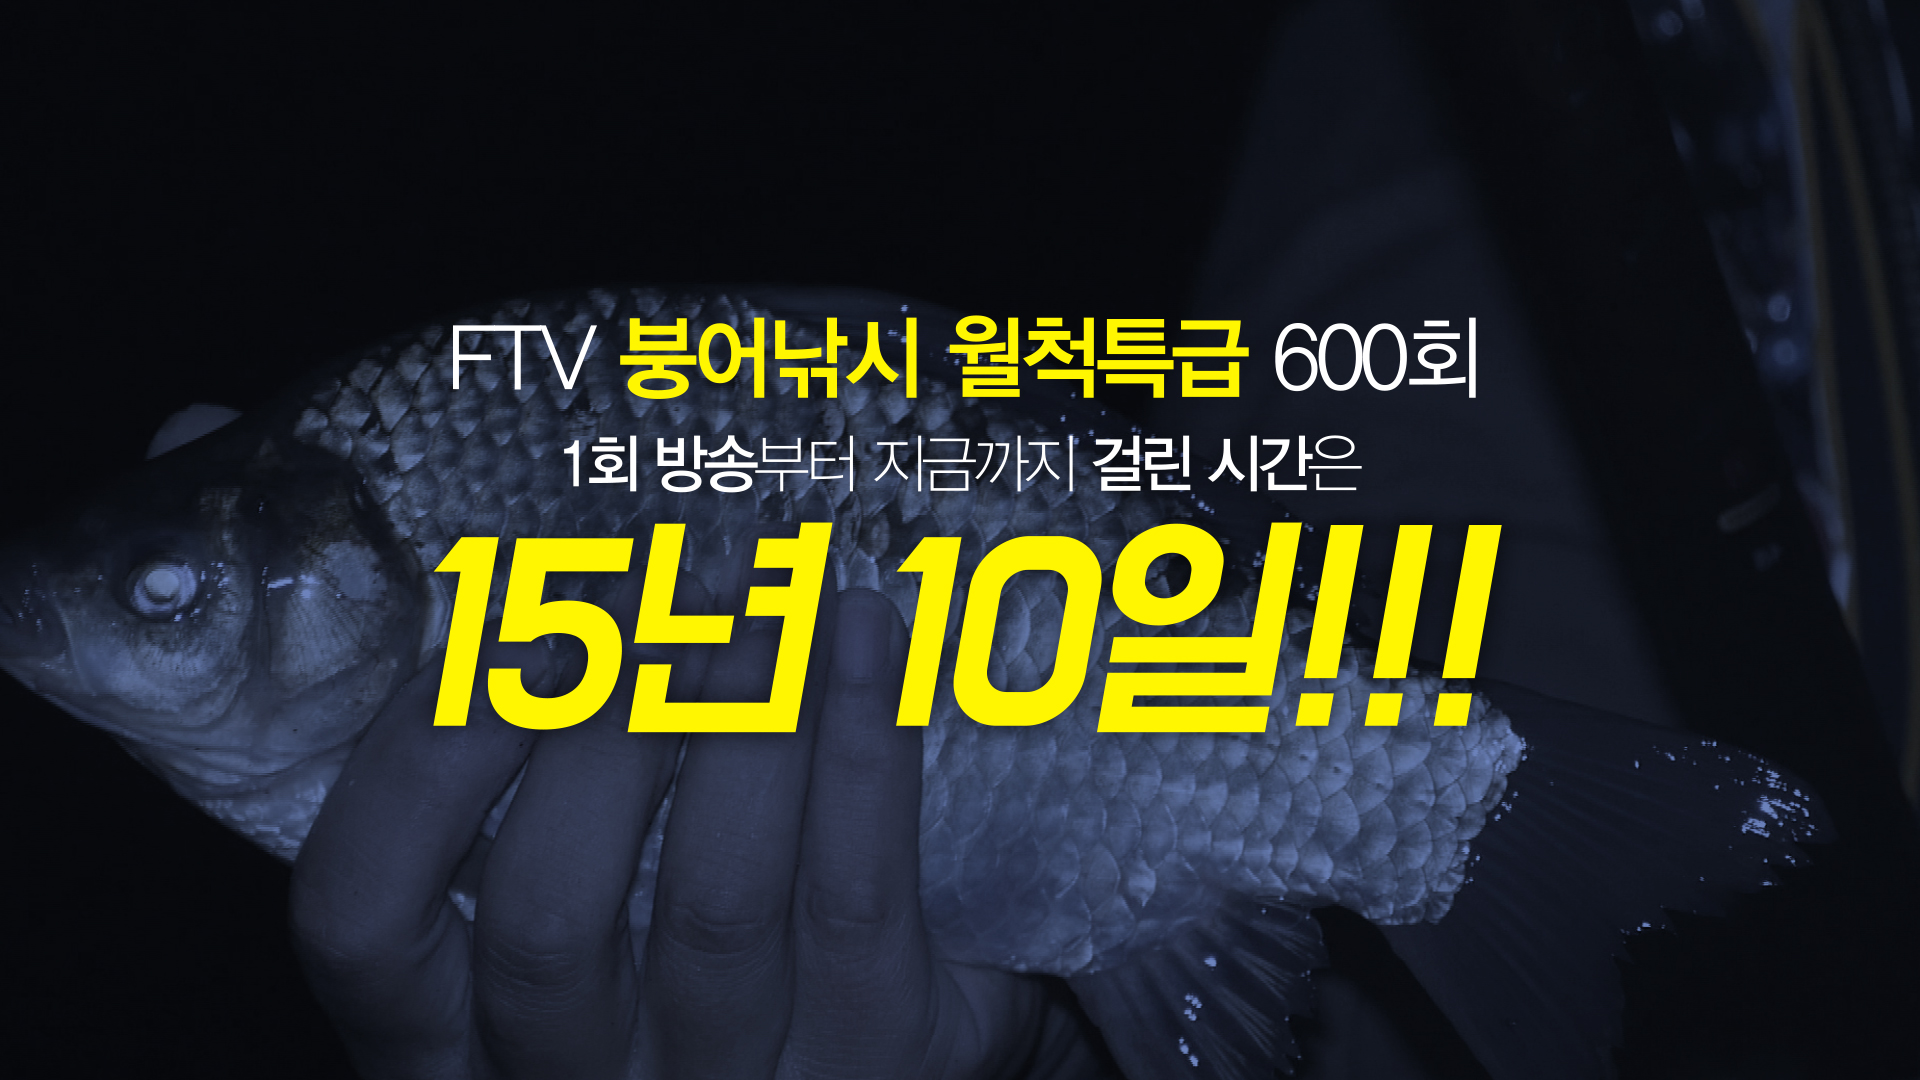 FTV ‘붕어낚시 월척특급’ 600회...케이블방송 최장수 프로그램·15년 10일간의 대기록